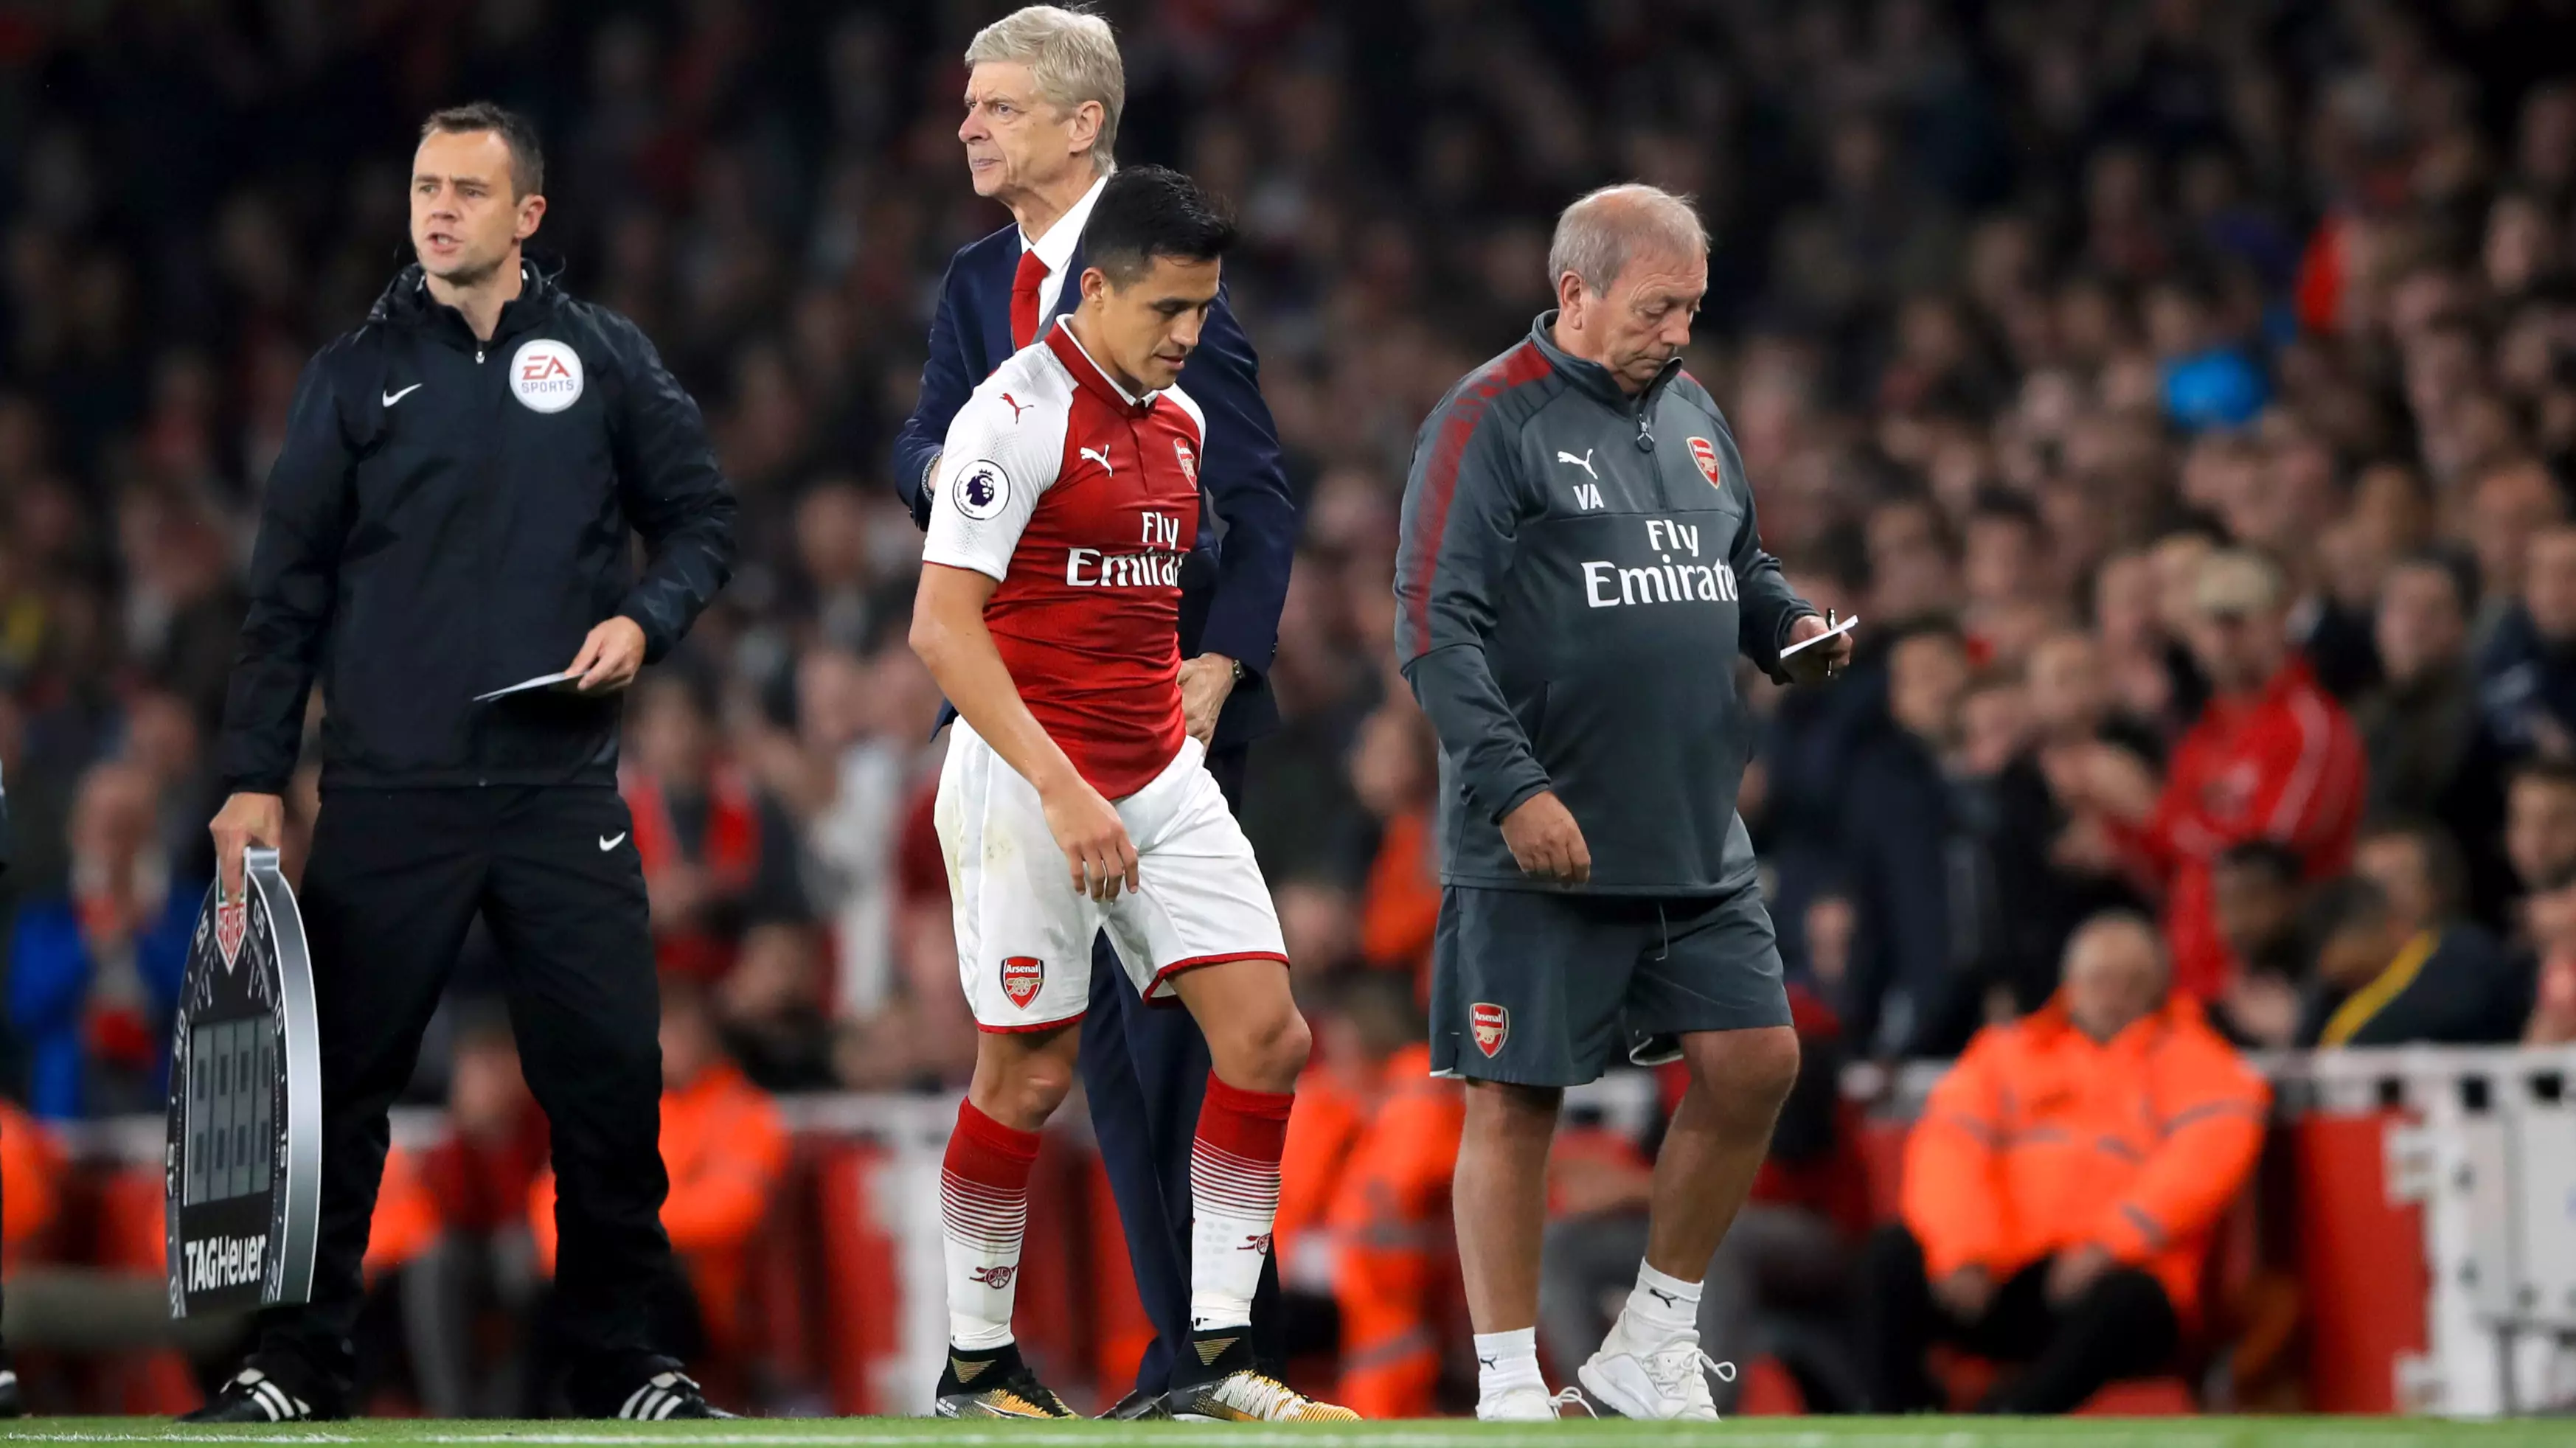 Arsenal Fans Rip Into Alexis Sanchez For His 'Unprofessional' Actions vs West Brom 